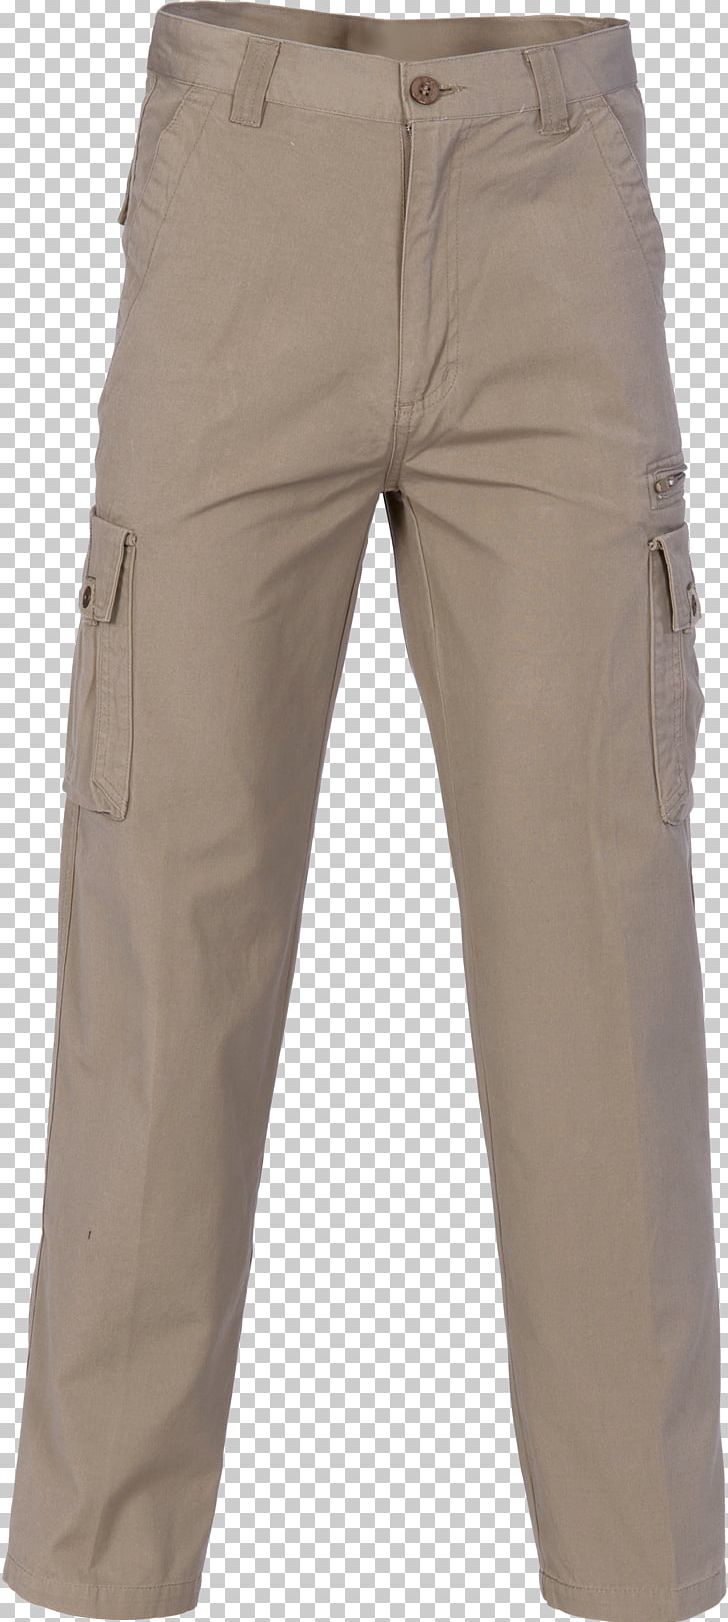 Cargo Pants Clothing Bermuda Shorts Uniform PNG, Clipart, Beige, Bermuda Shorts, Cap, Cargo, Cargo Pants Free PNG Download